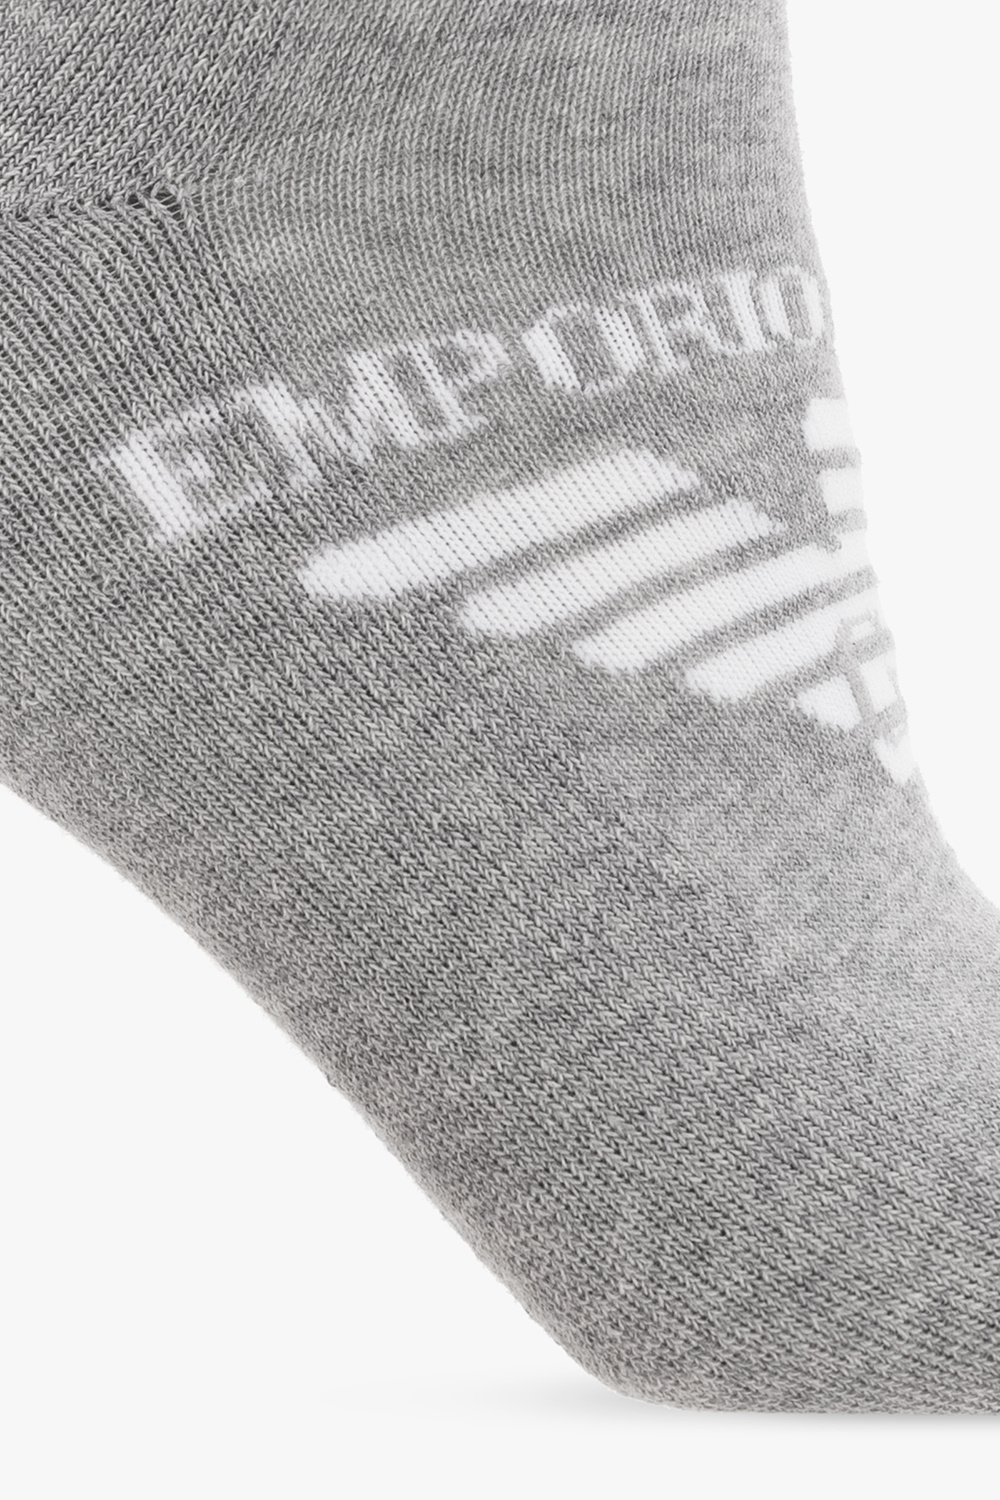 Emporio Armani Armani EA 7 Poloskjorte med logobånd i sort